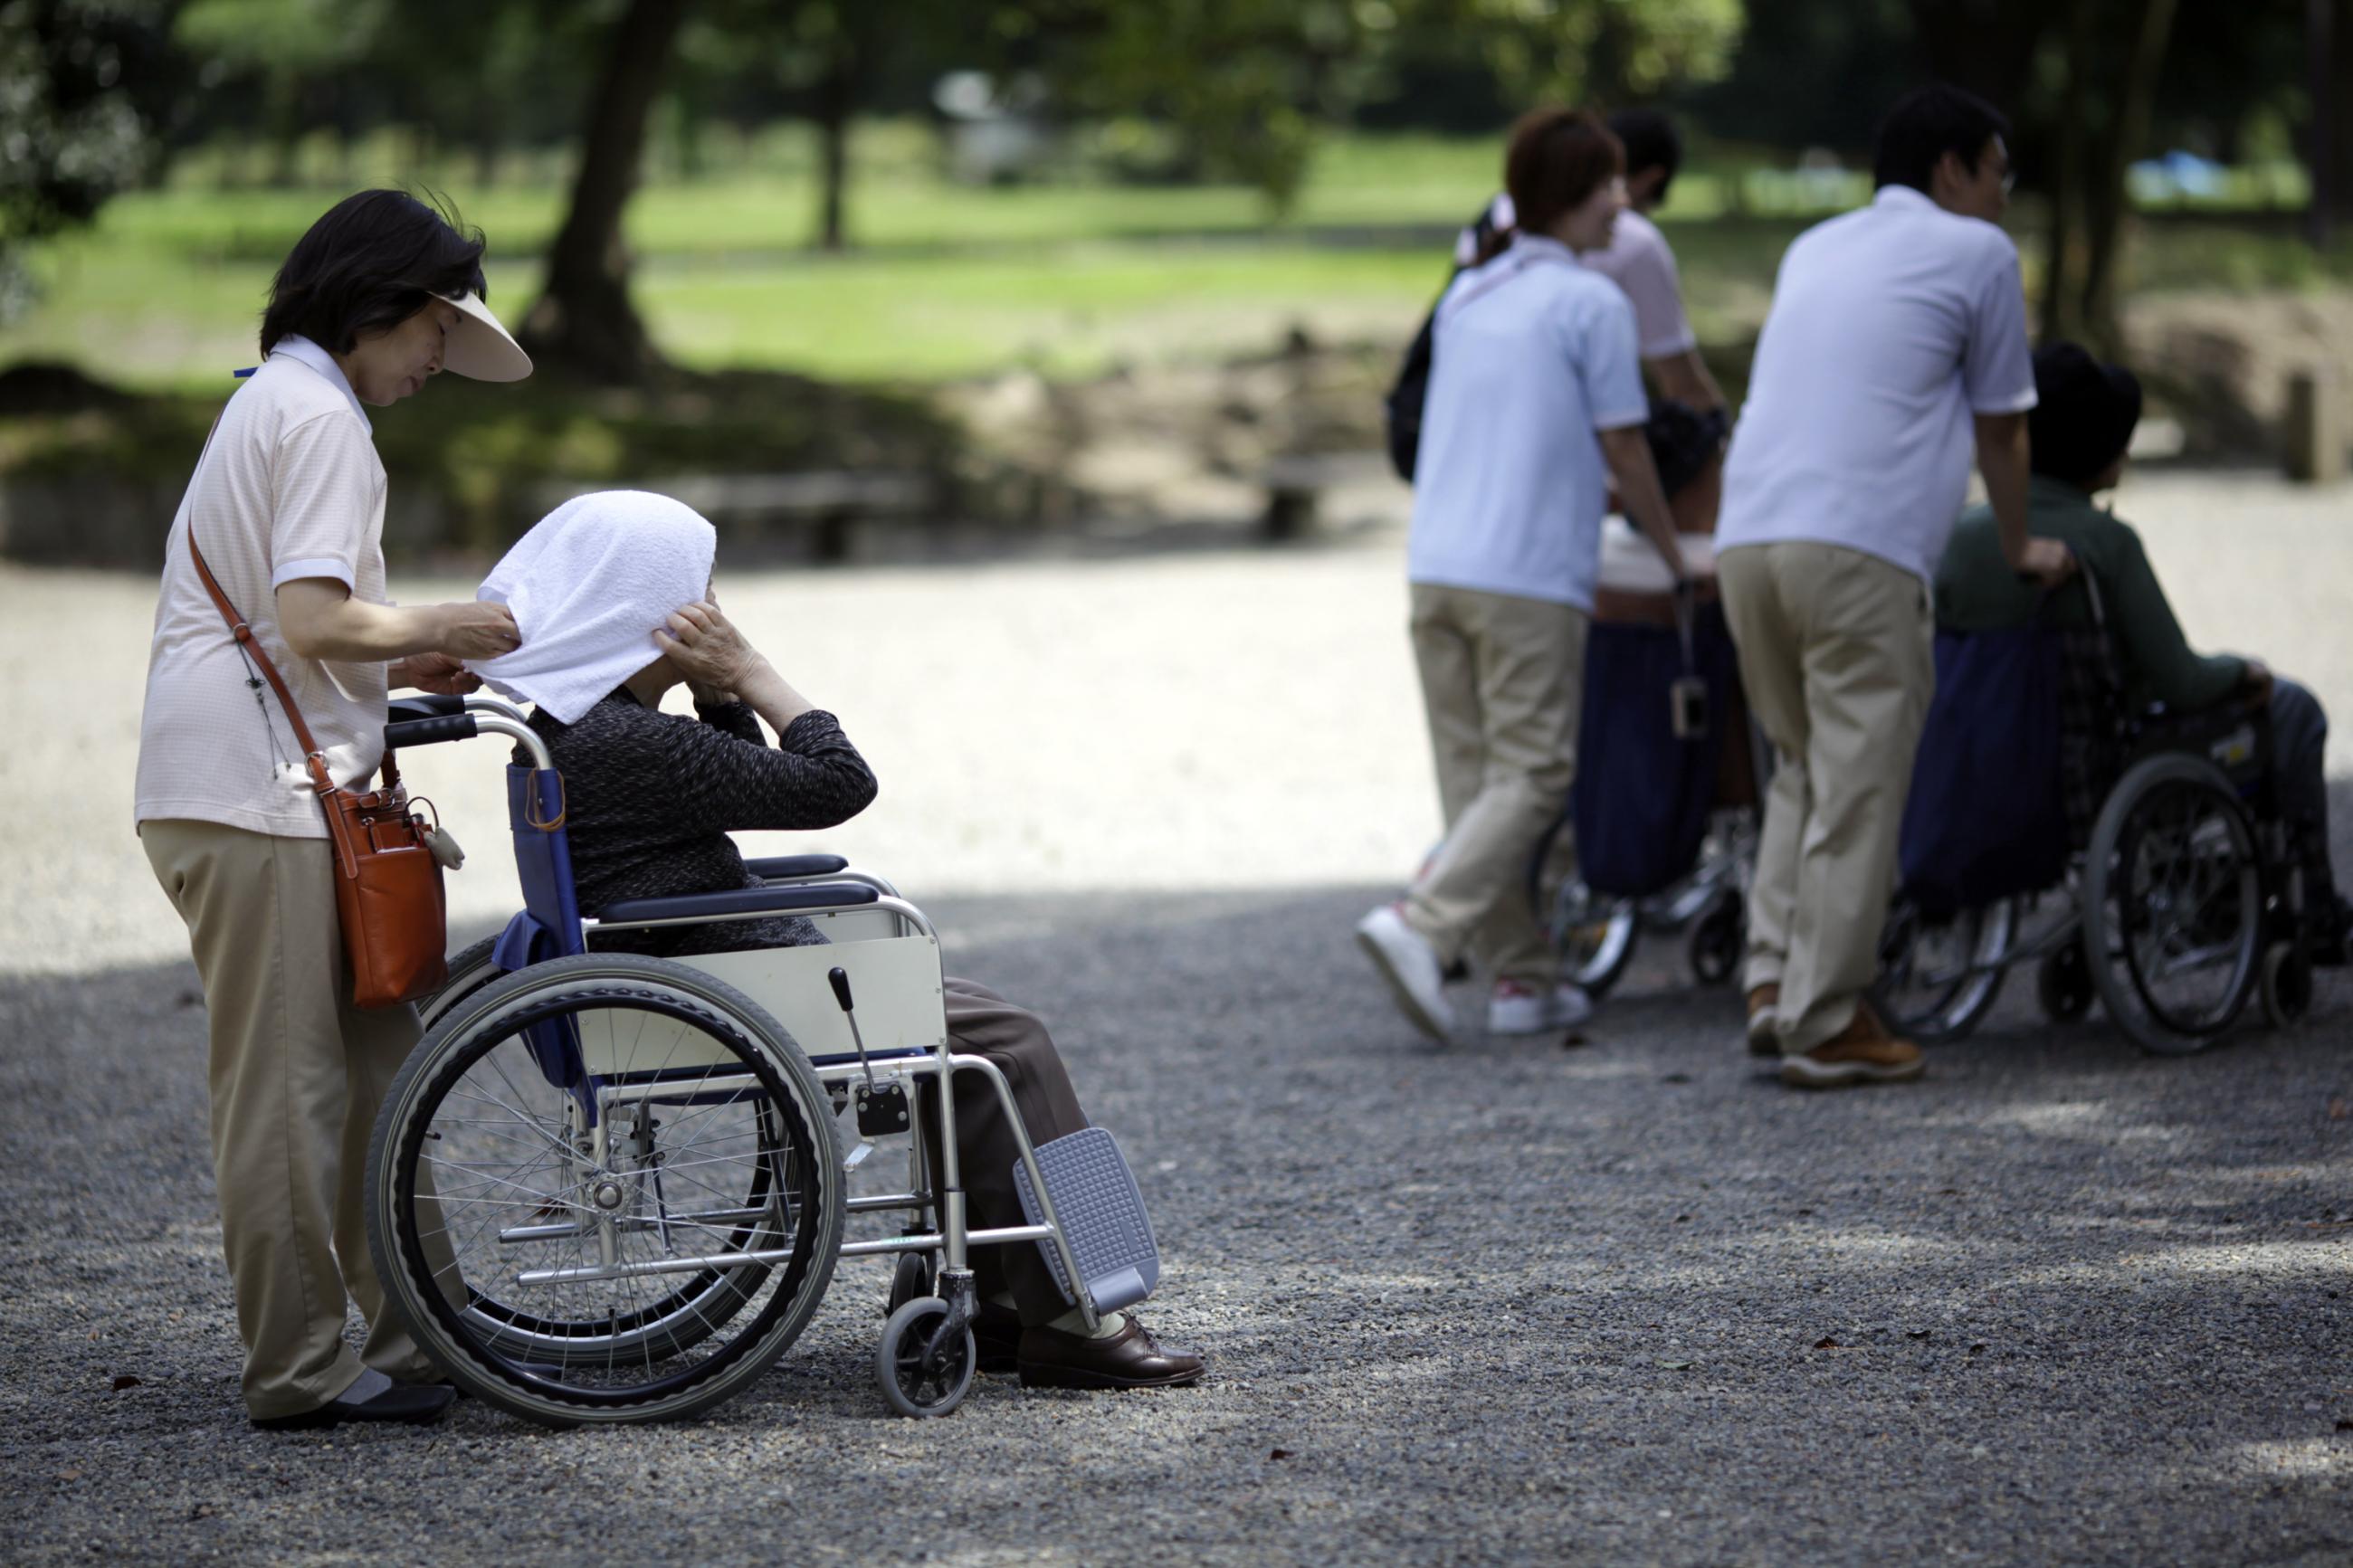 A woman helps an elderly woman in a wheelchair.